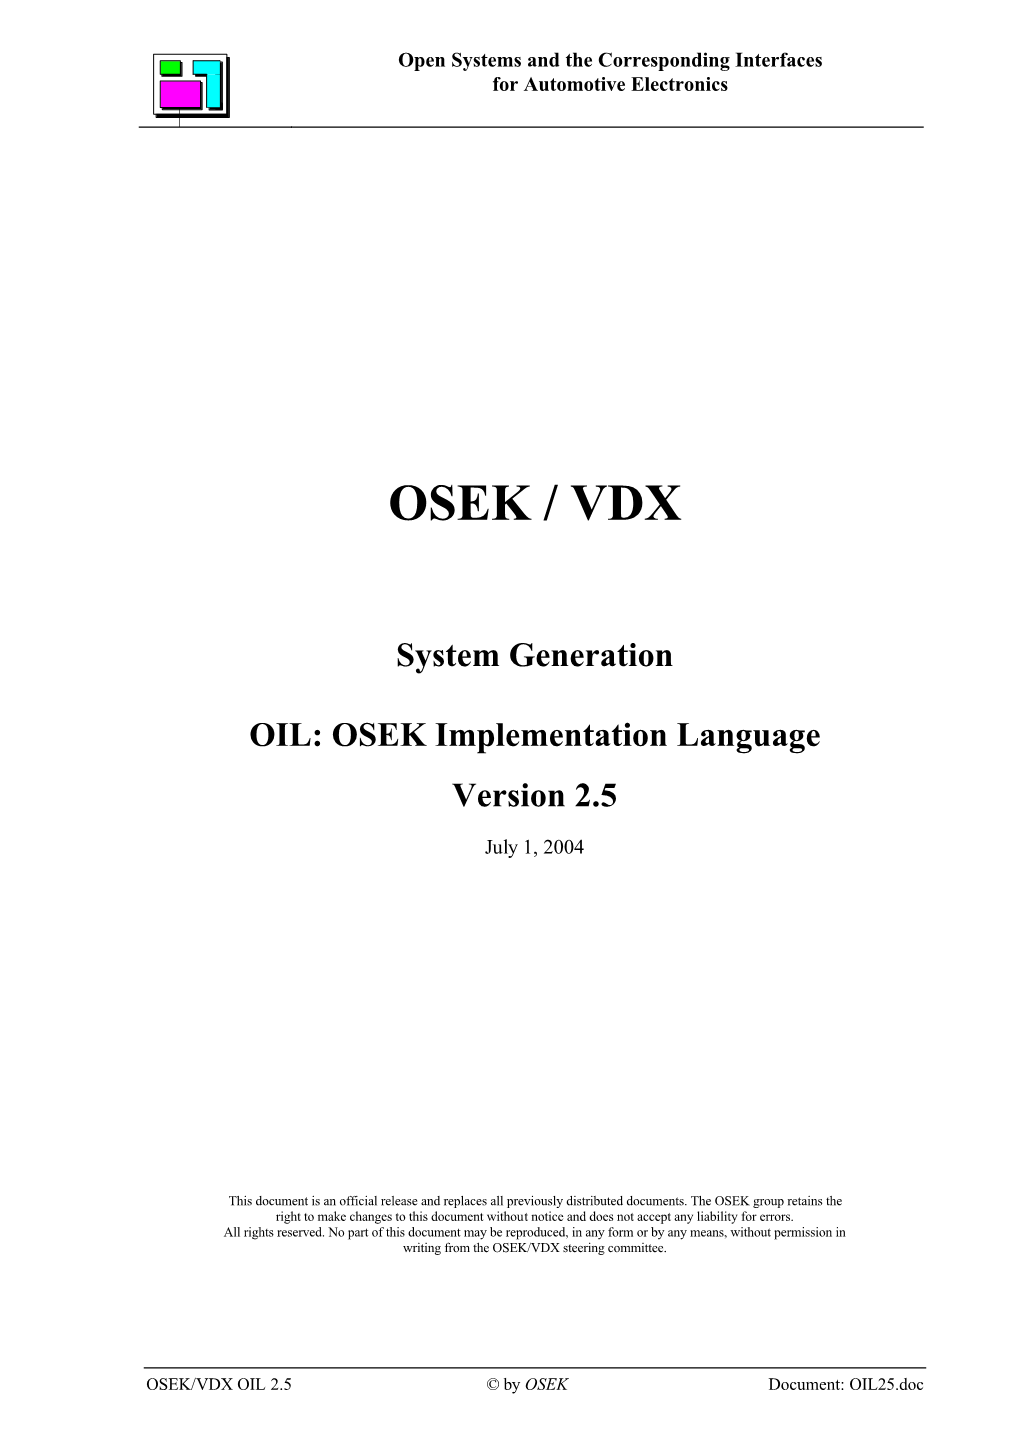 OSEK/VDX OSEK Implementation Language (OIL) Specification